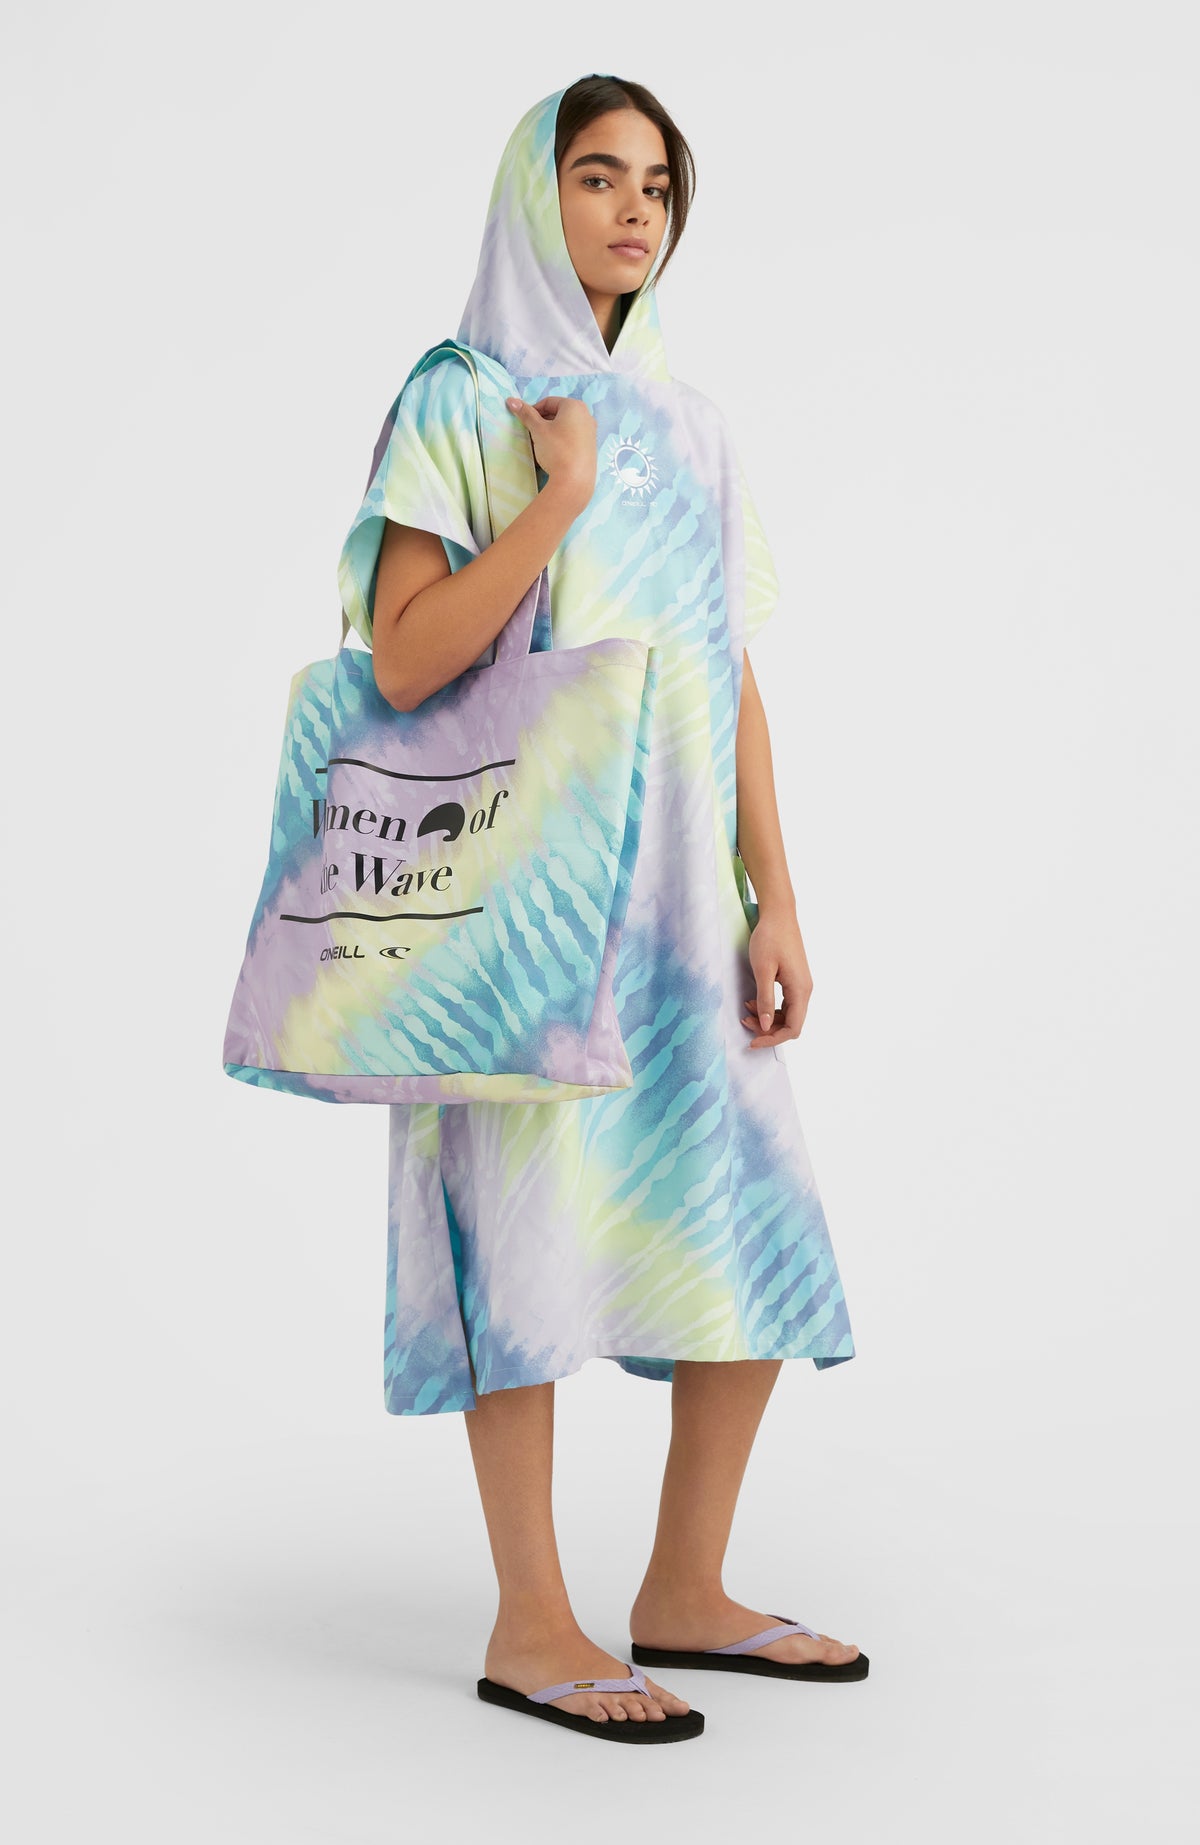 Louis Vuitton Women's Hooded Zip Jacket Monogram Tie Dye Polyester